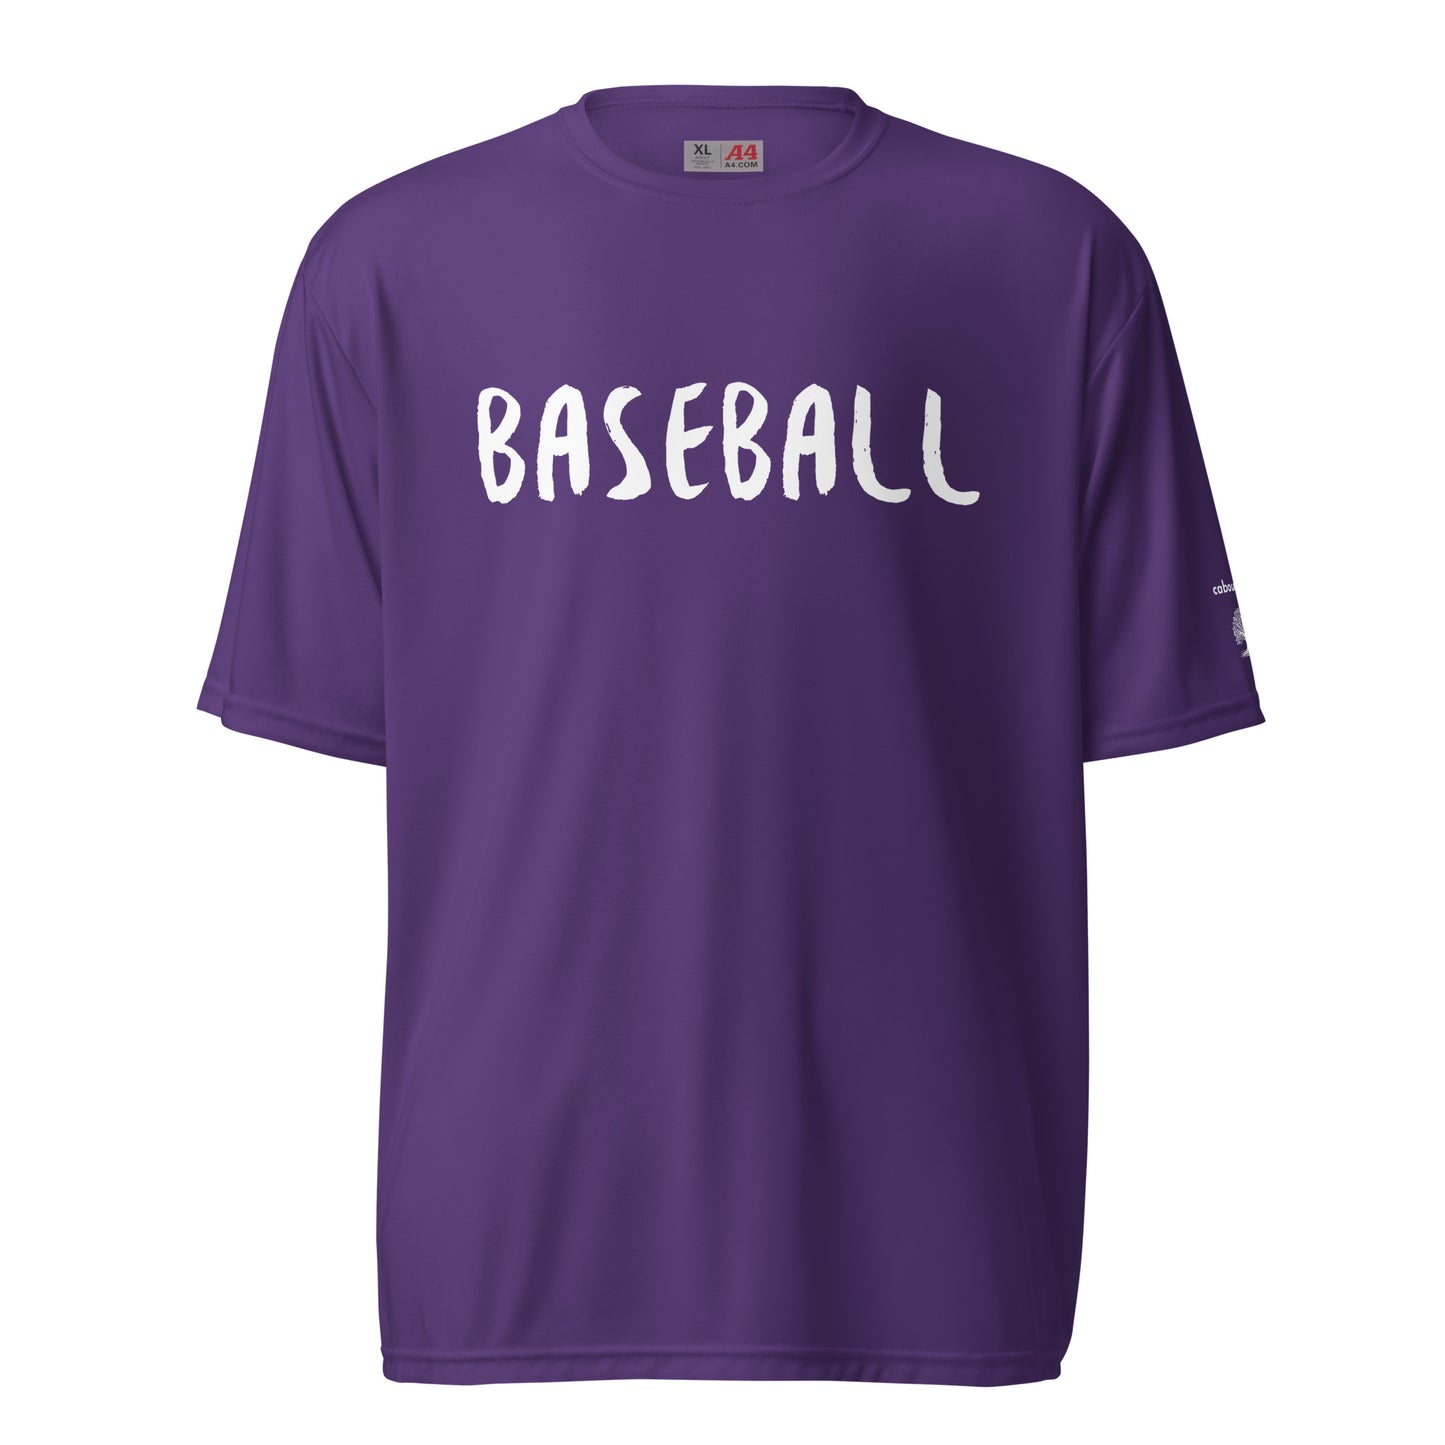 Unisex performance crew neck t-shirt - Baseball